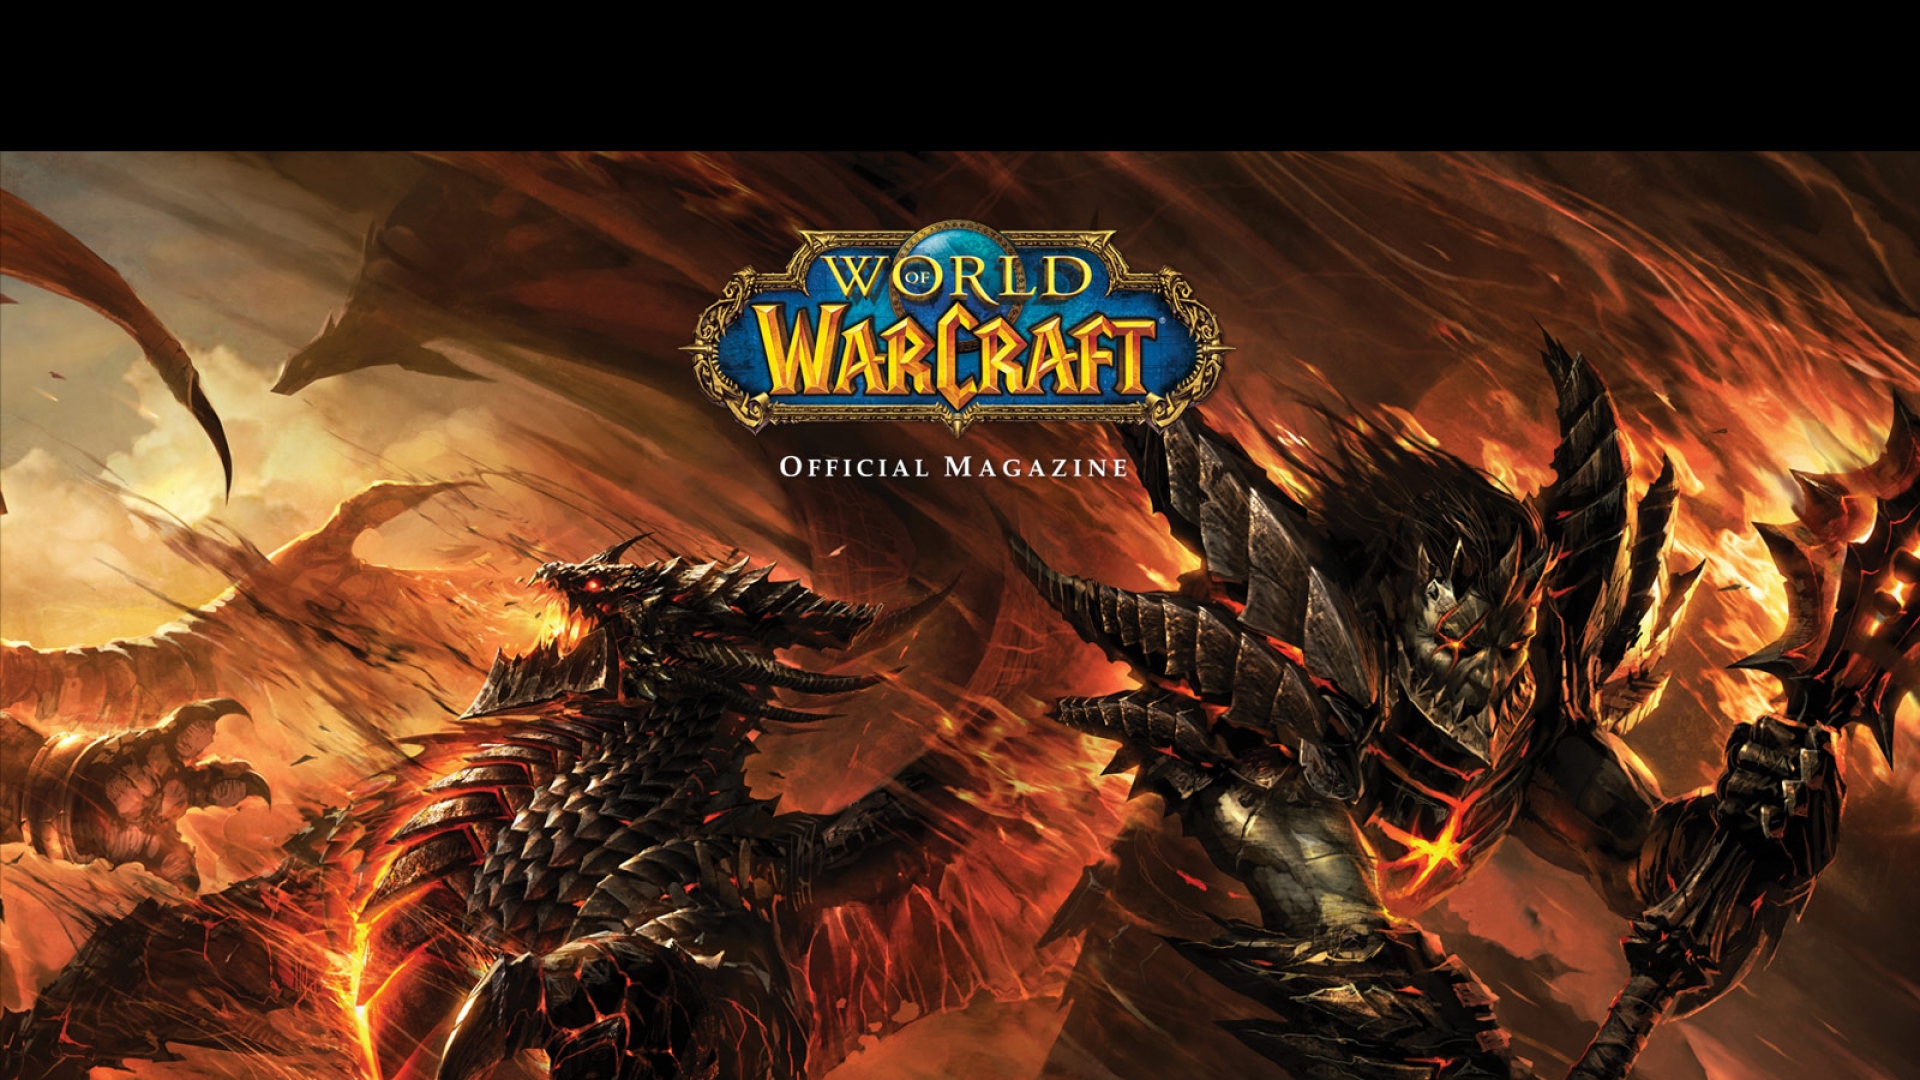 Download Wallpaper 1920x1080 world of warcraft monsters fire